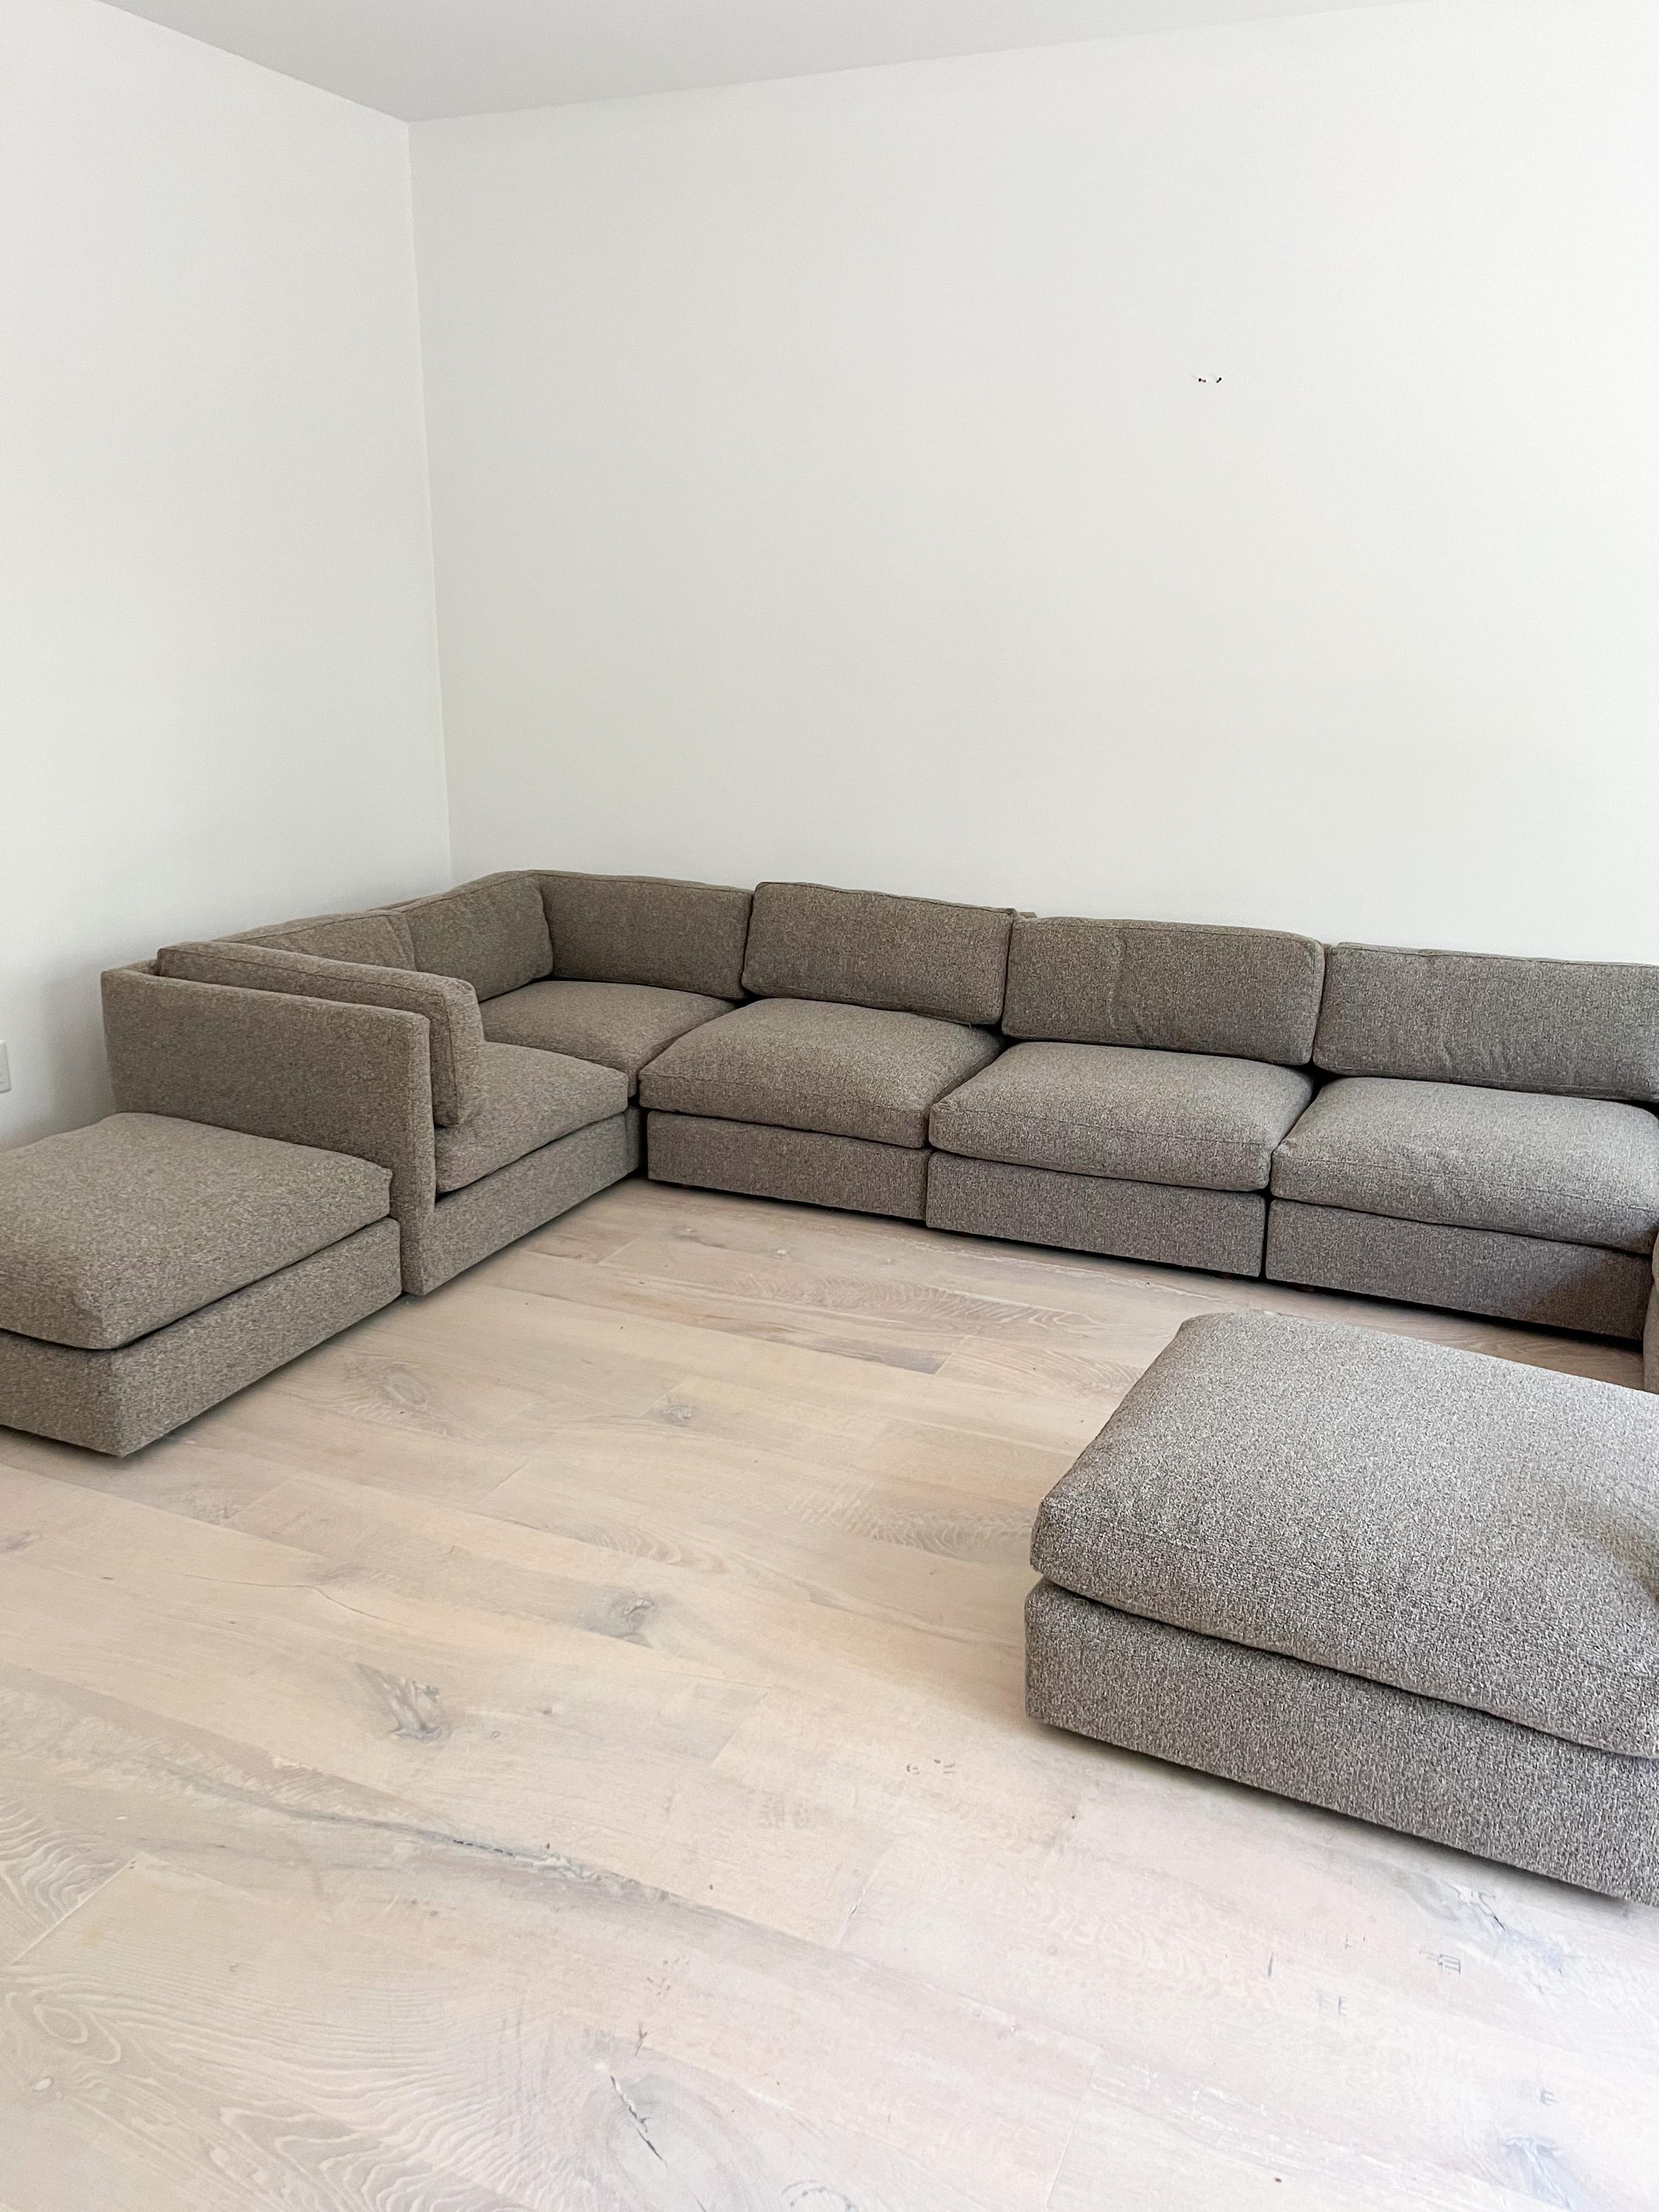 Milo Baughman Attributed 10 Piece Modular Sectional Sofa, New Upholstery 15